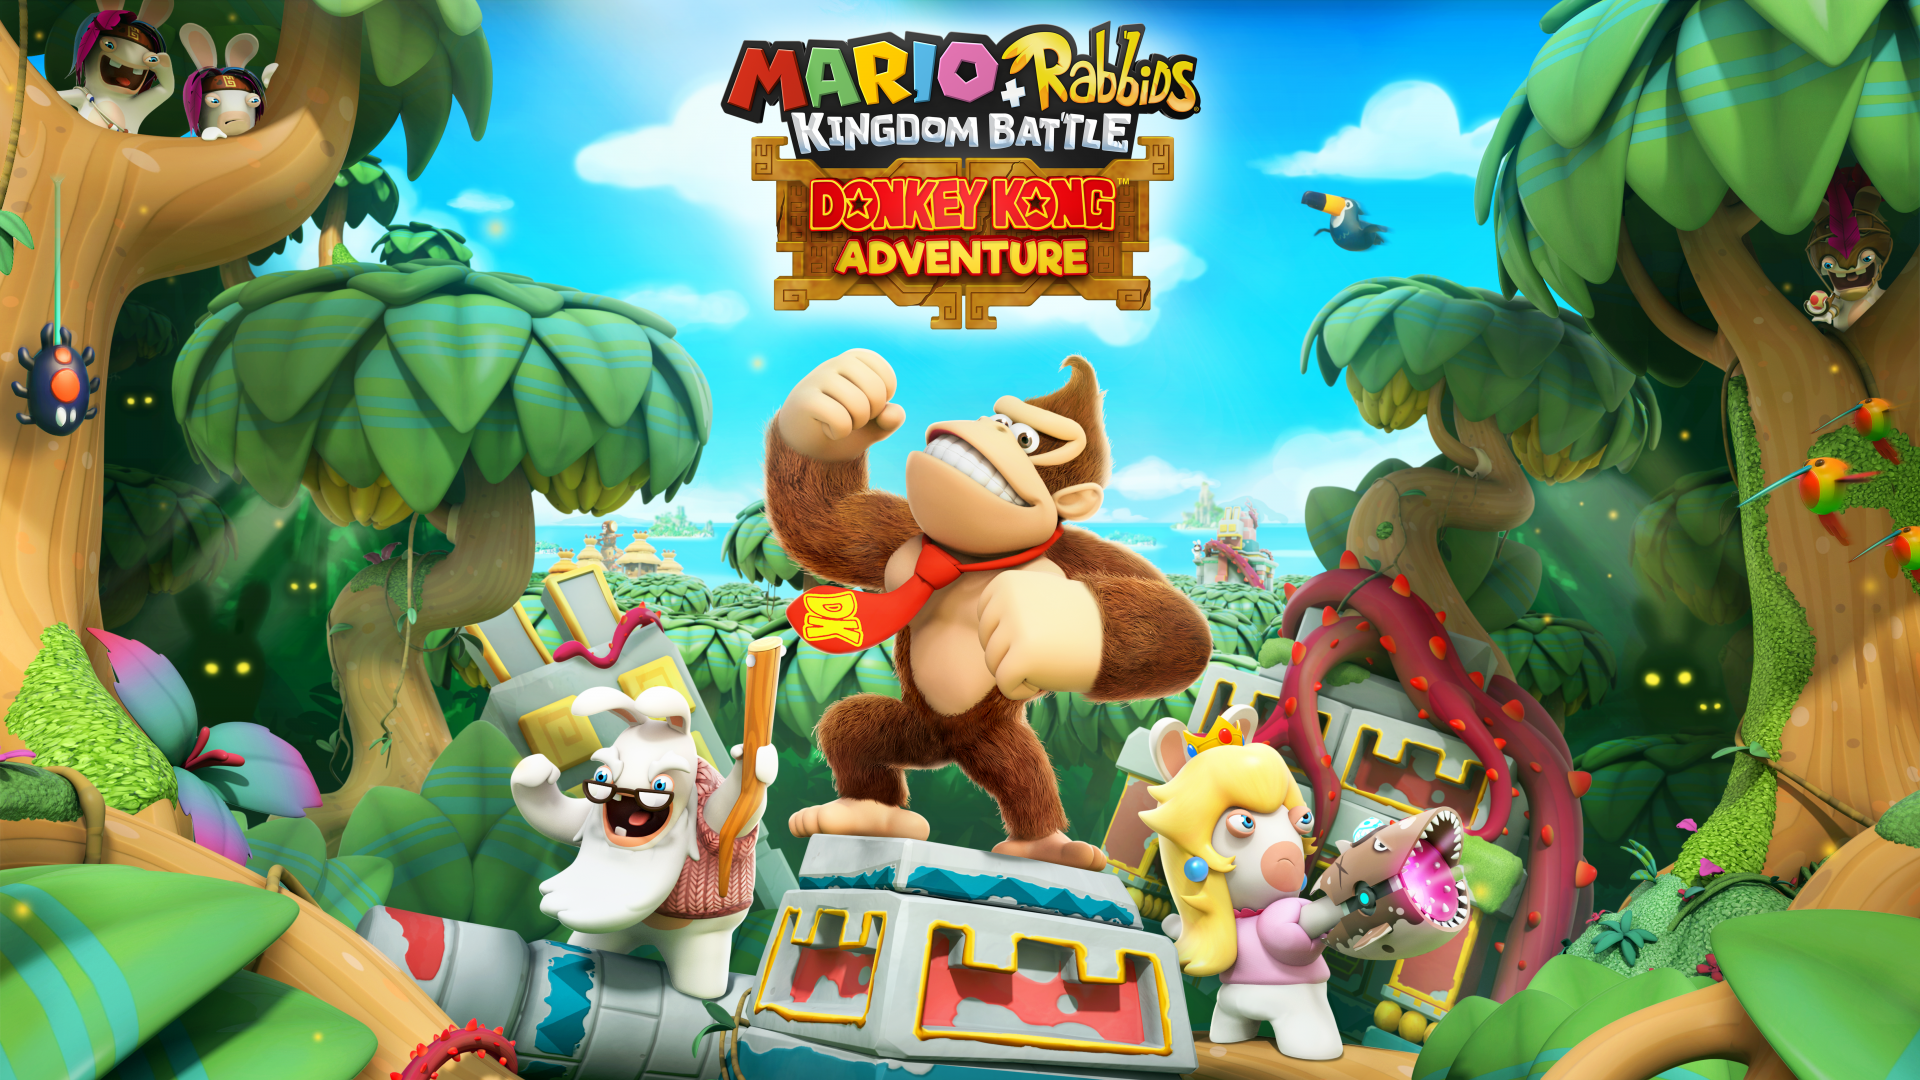 “Donkey Kong Adventure” การผจญภัยครั้งใหม่ใน Mario + Rabbids Kingdom Battle